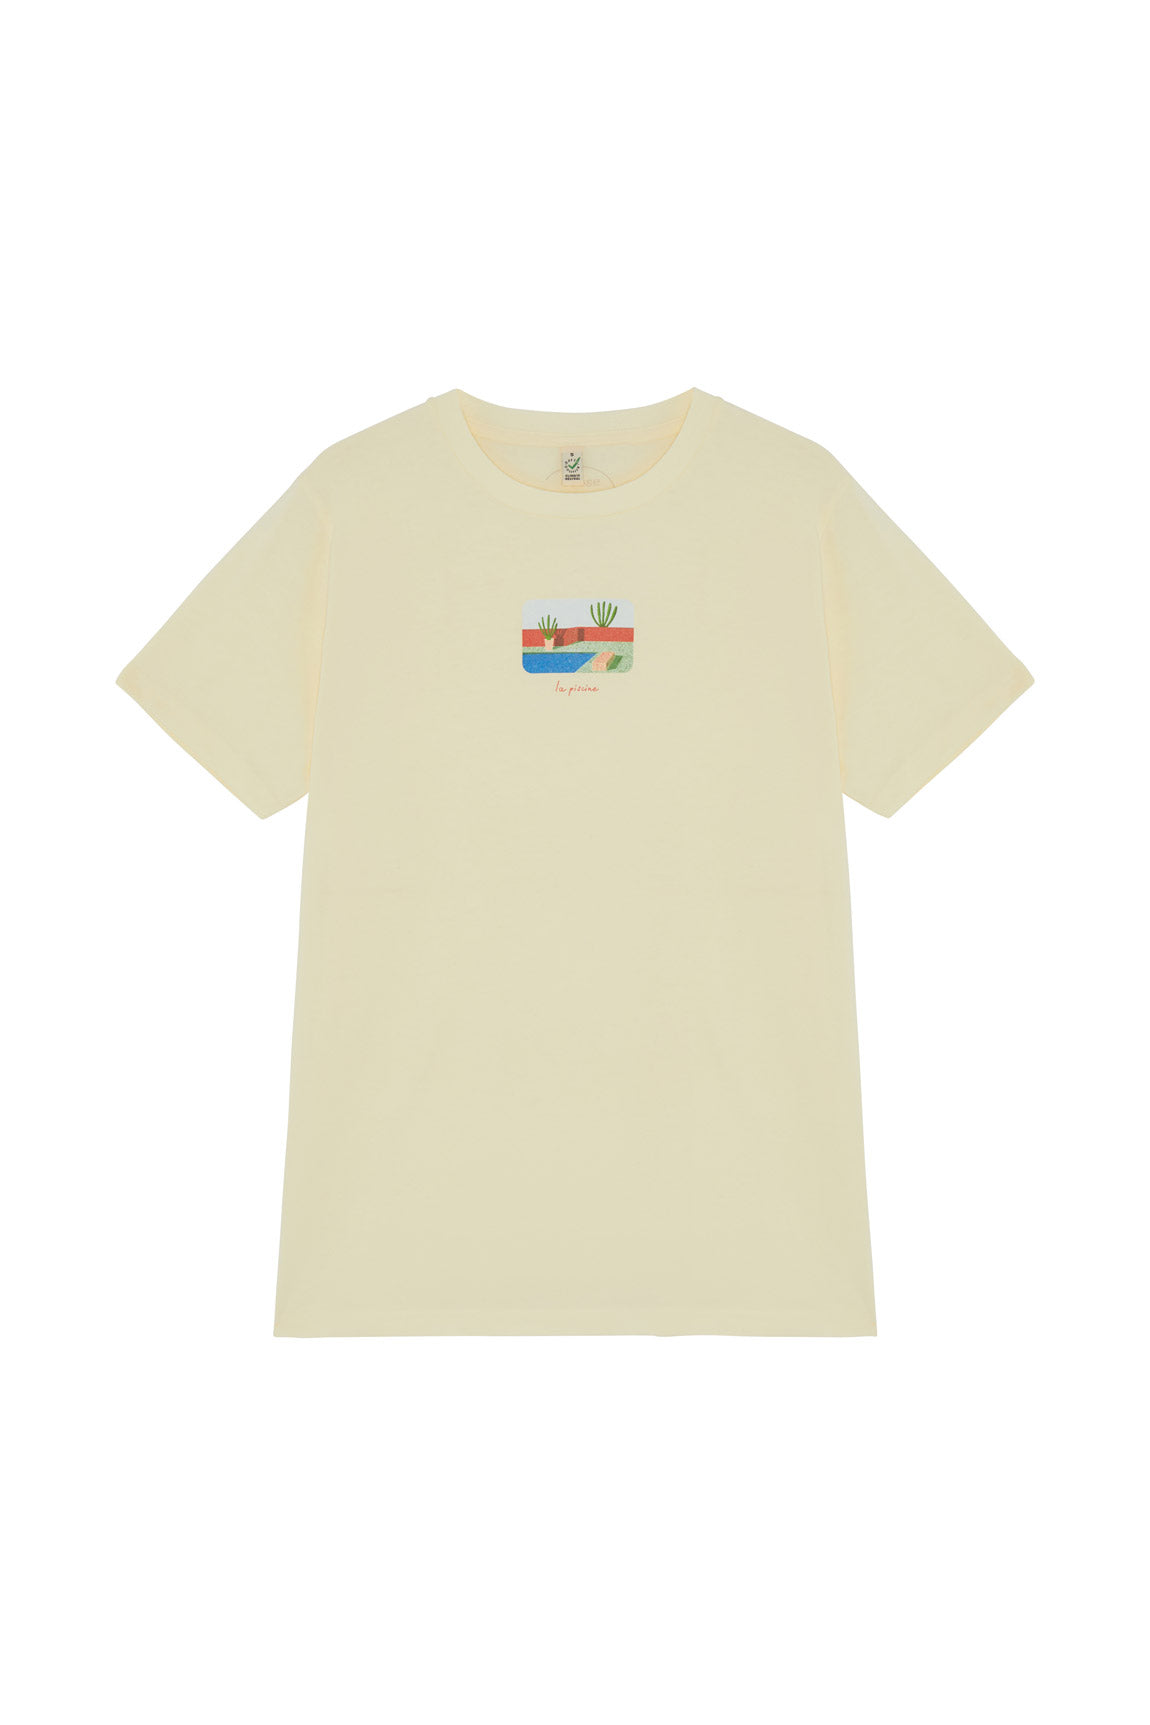 Seconds & Samples - Unisex Yellow Organic Cotton T-shirt - Ana Popescu Print